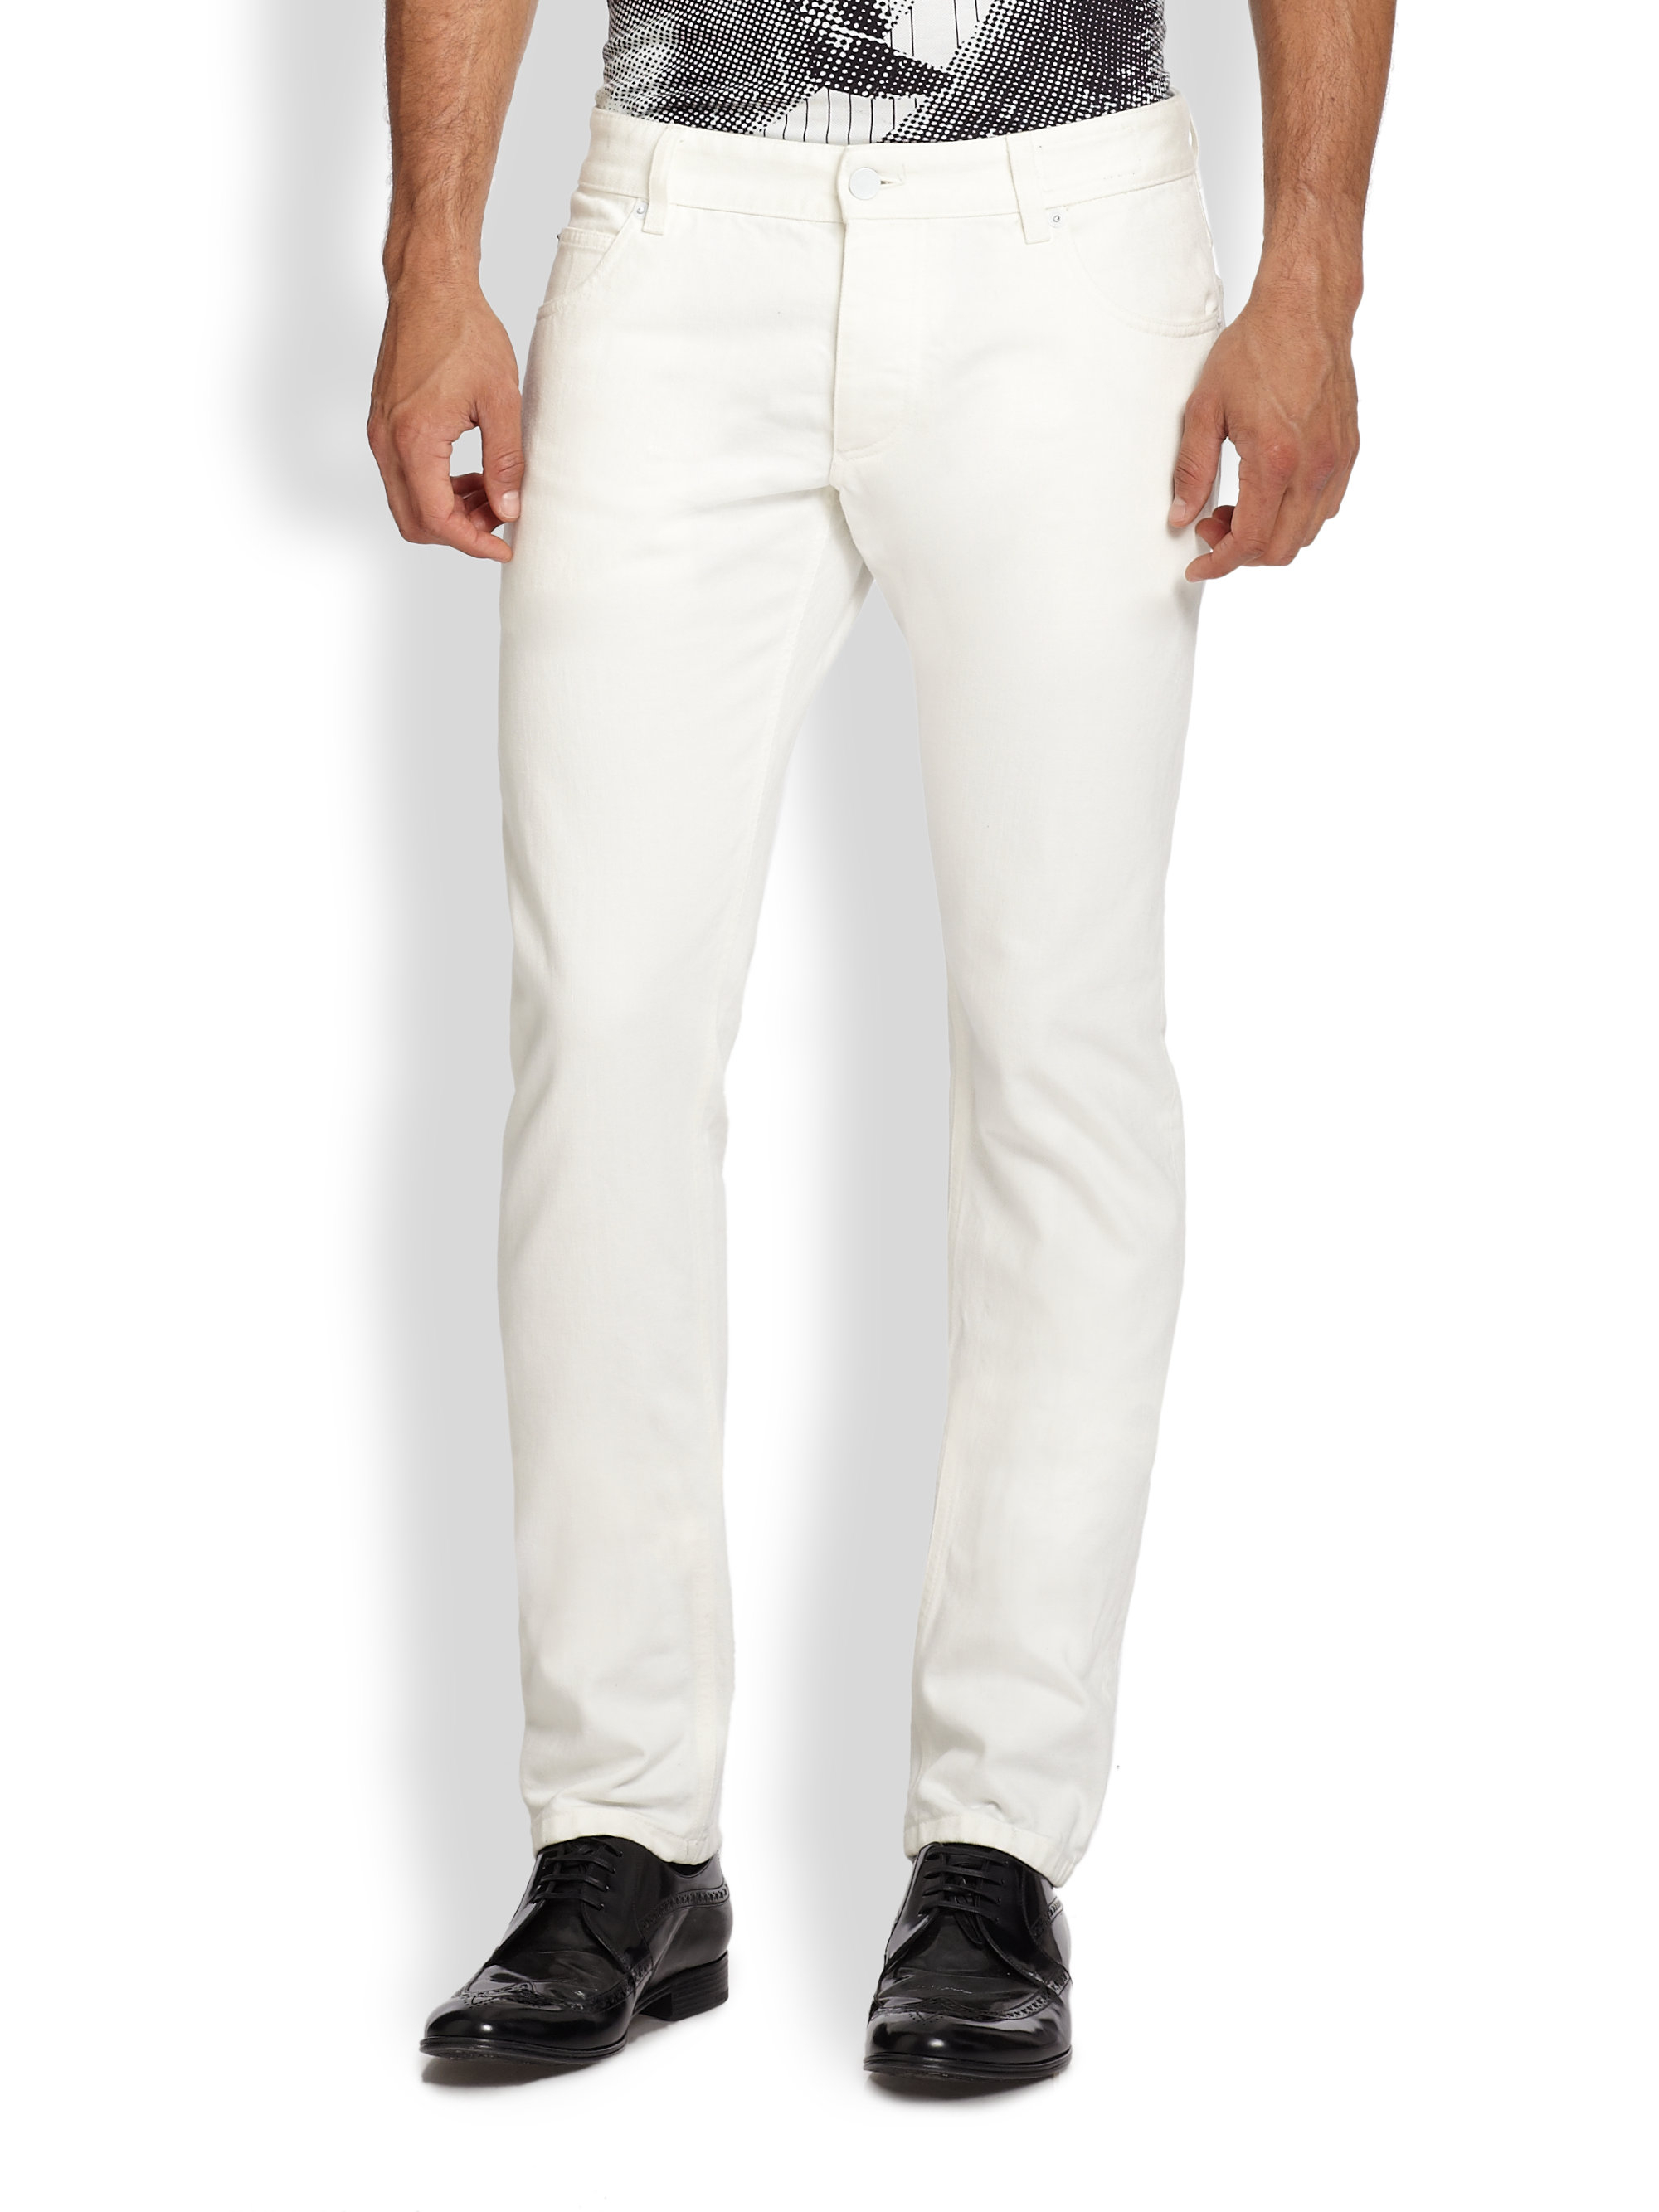 Lyst - Dolce & Gabbana Stretch Denim Jeans in White for Men